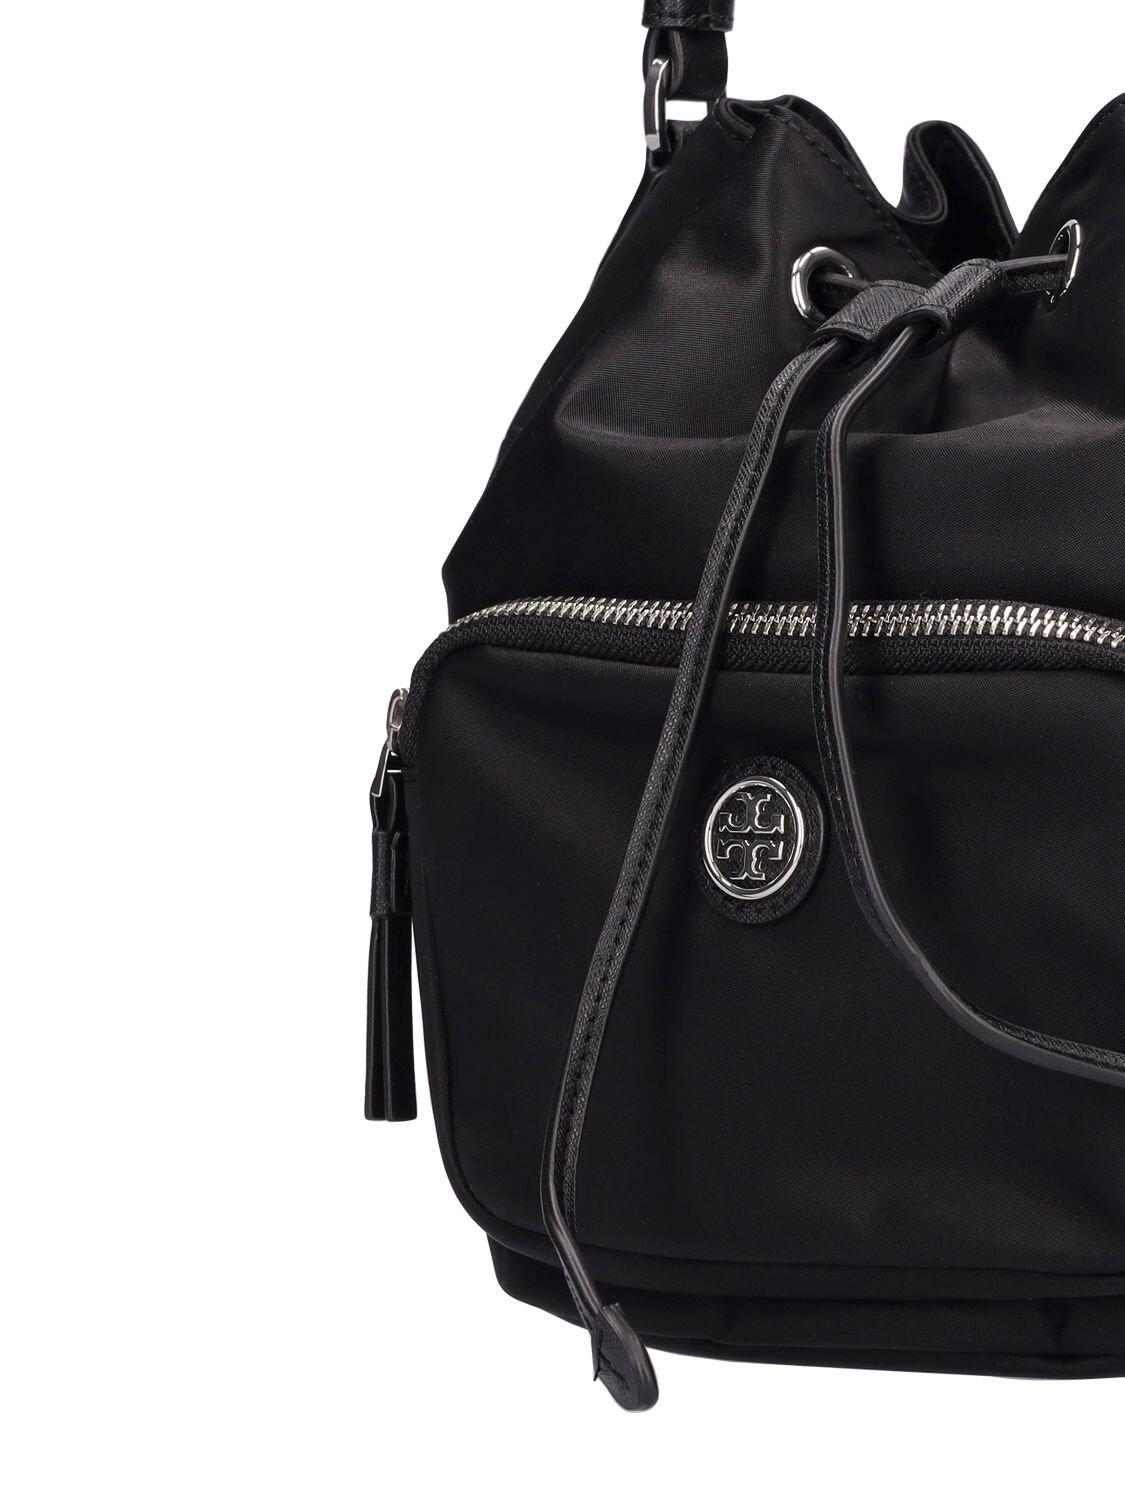 Tory Burch - Miller Leather Bucket Bag - Black for Sale in Boca Raton, FL -  OfferUp